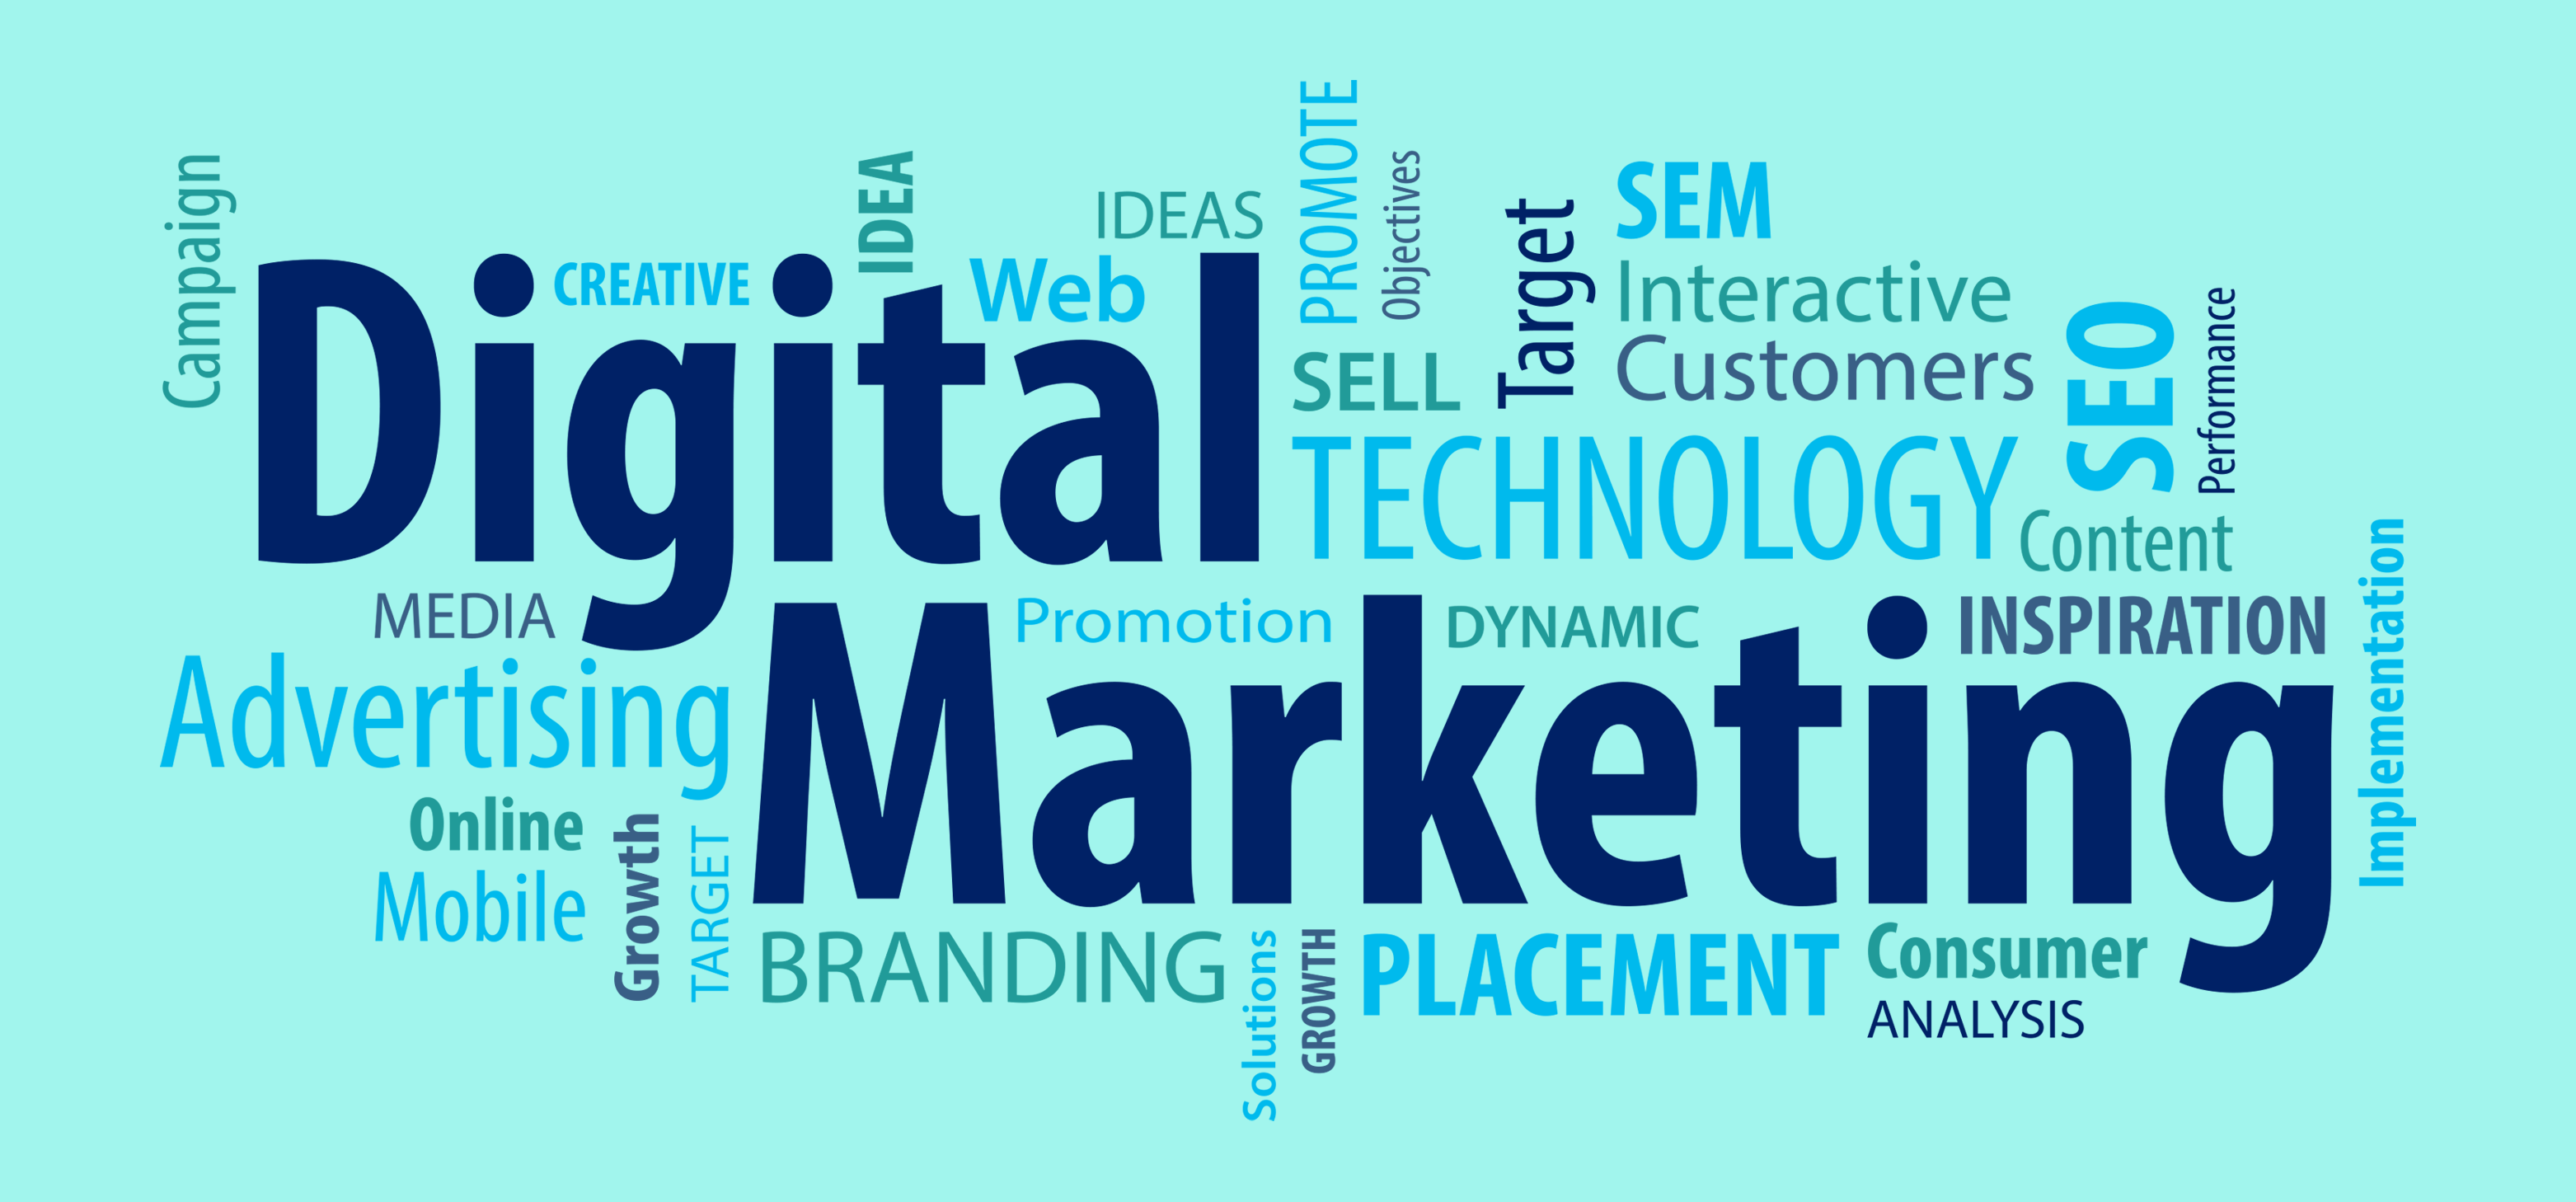 Digital Marketing Jargons featured